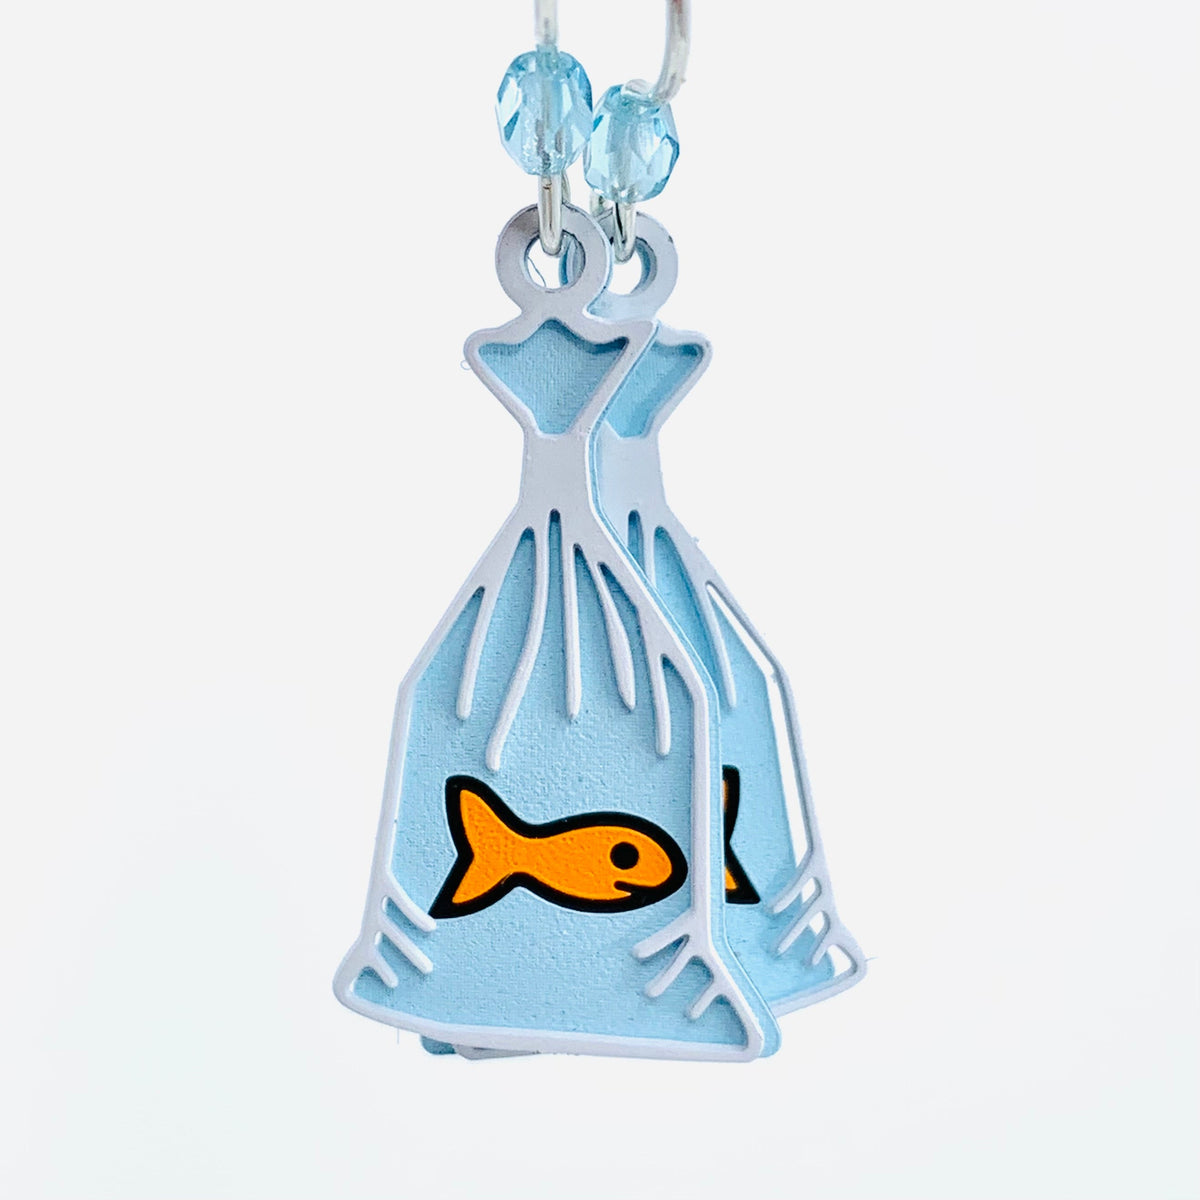 Tiny Whimsical Earrings, Goldfish Bag Sienna Sky 